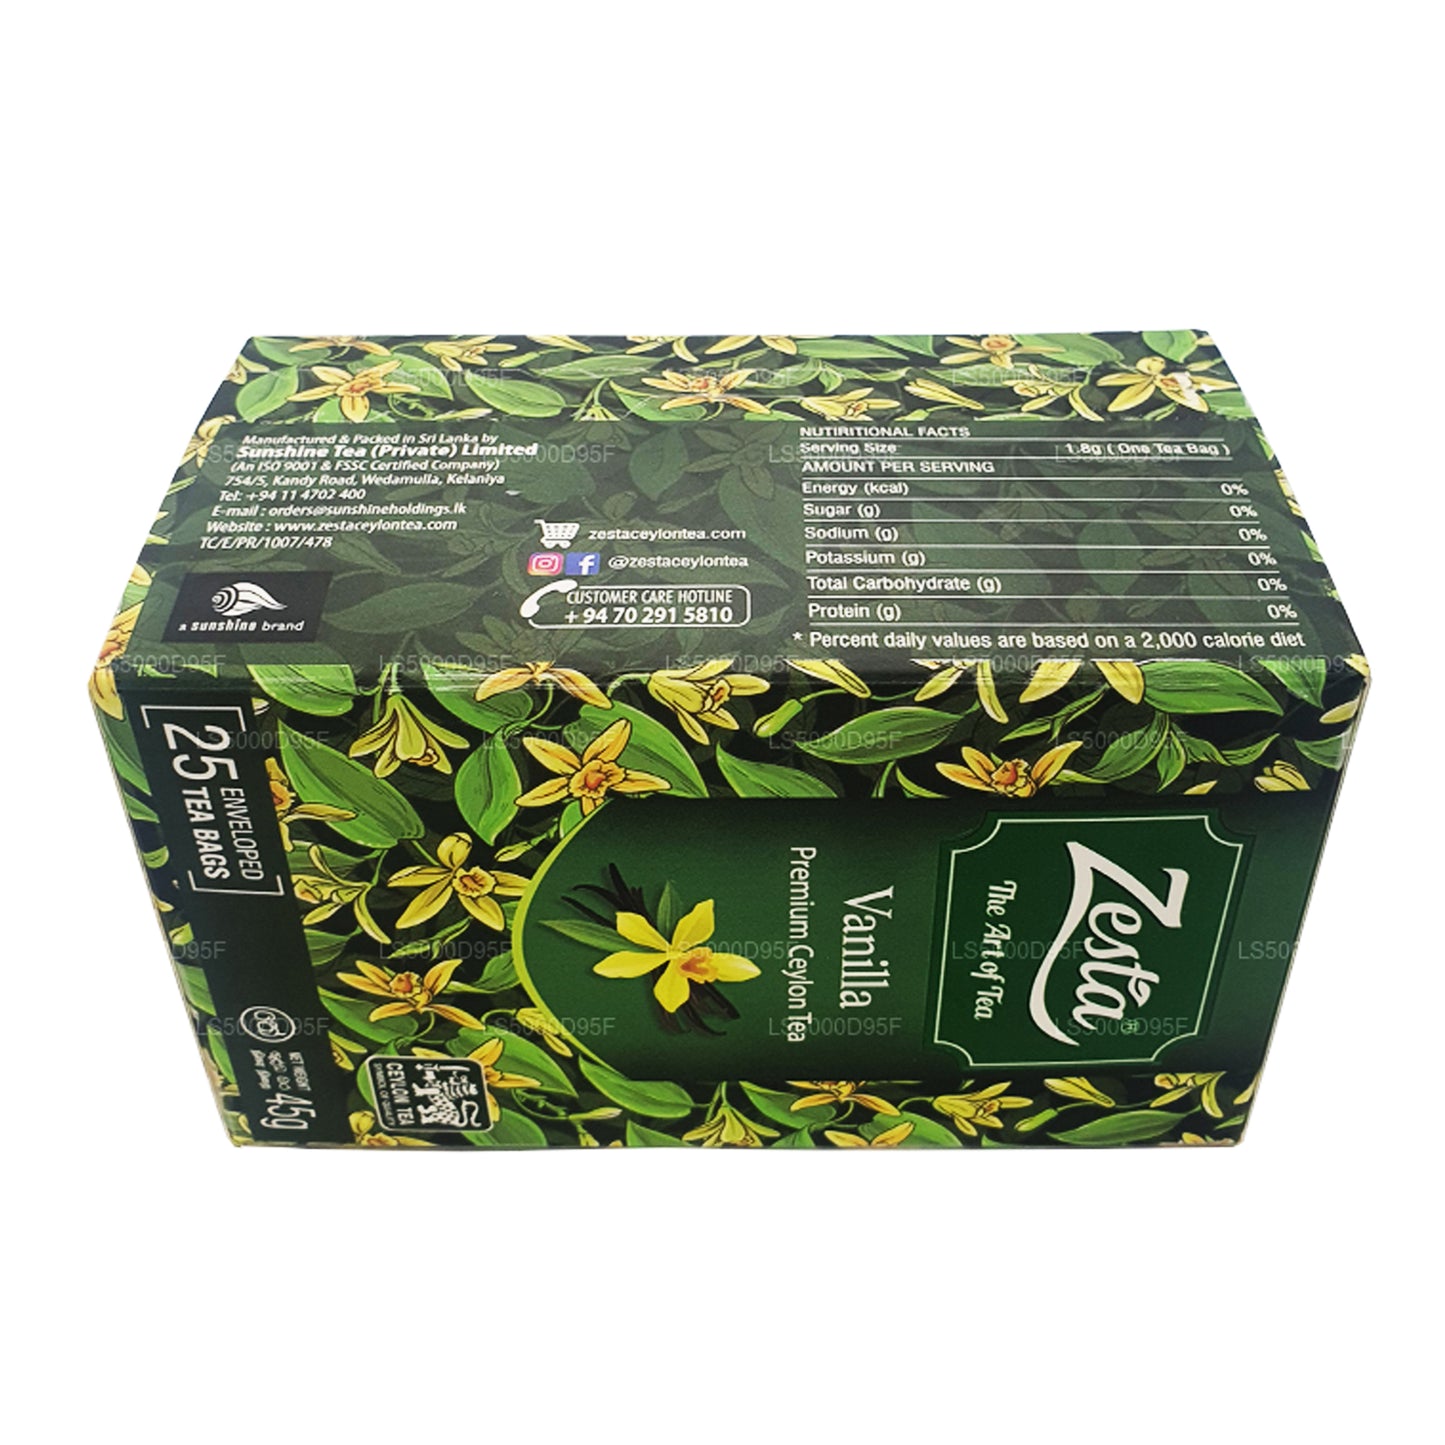 Zesta Vanilyalı Siyah Çay (45g) 25 Çay Poşeti